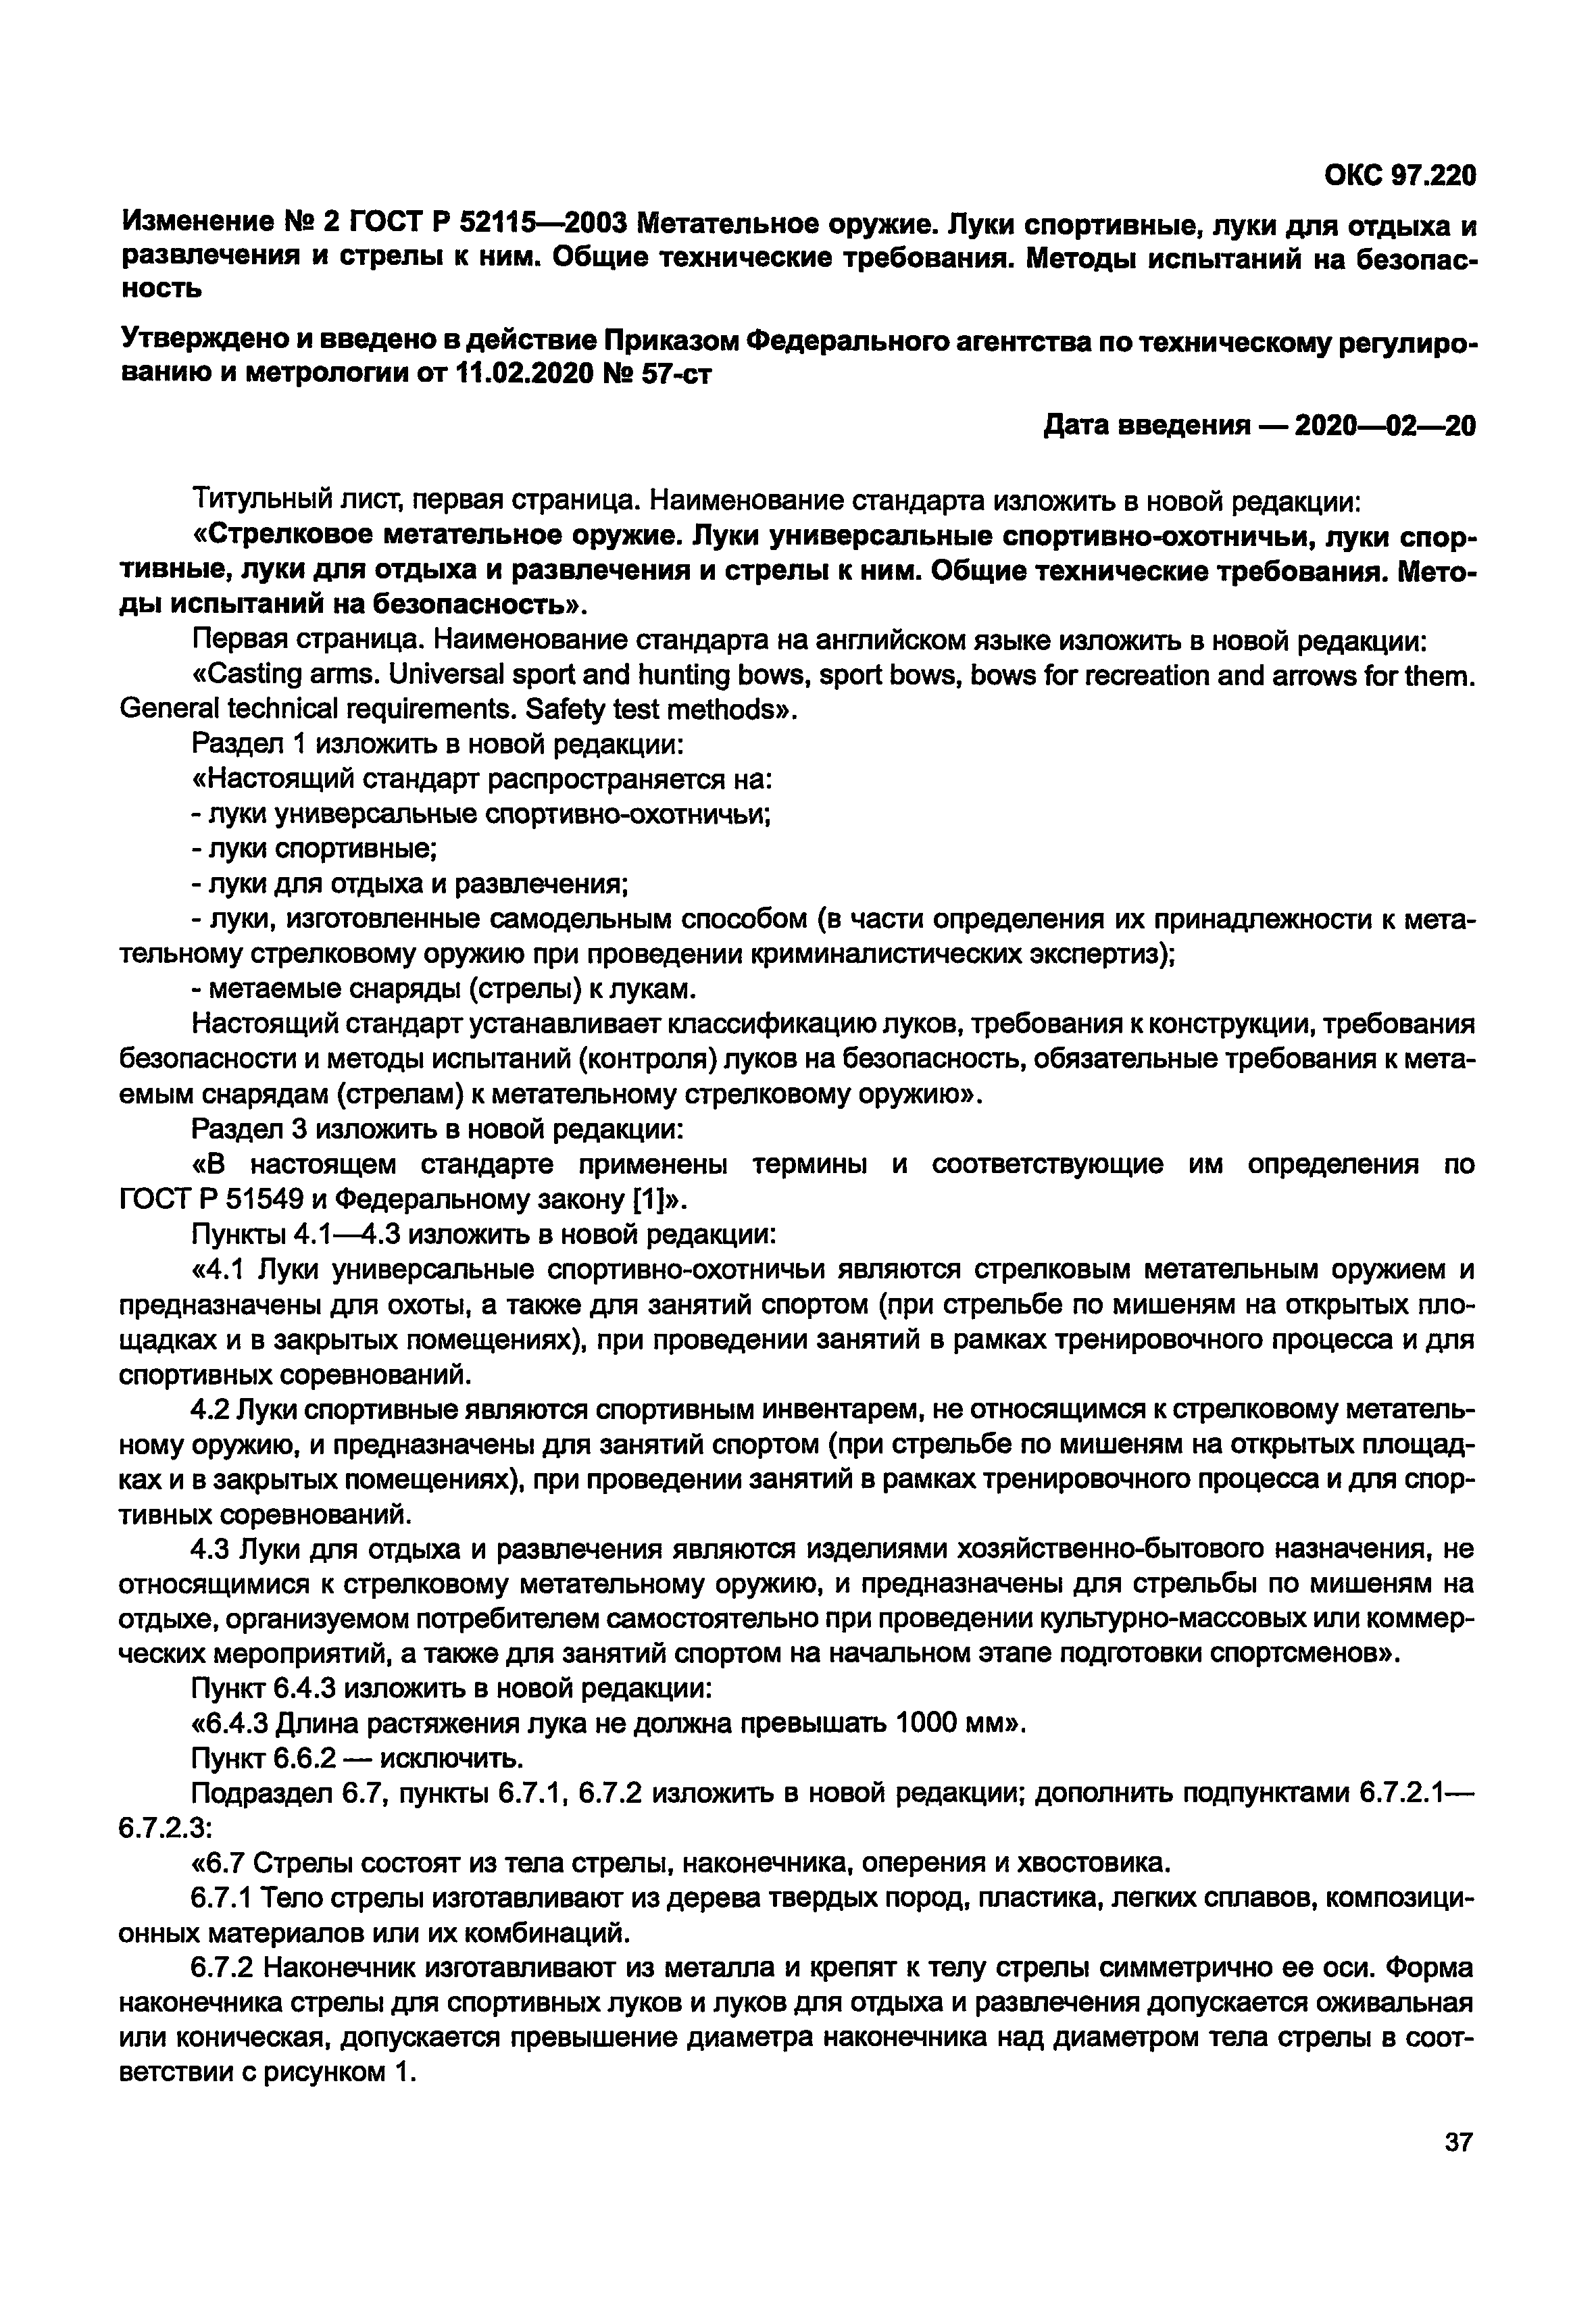 ГОСТ Р 52115-2003